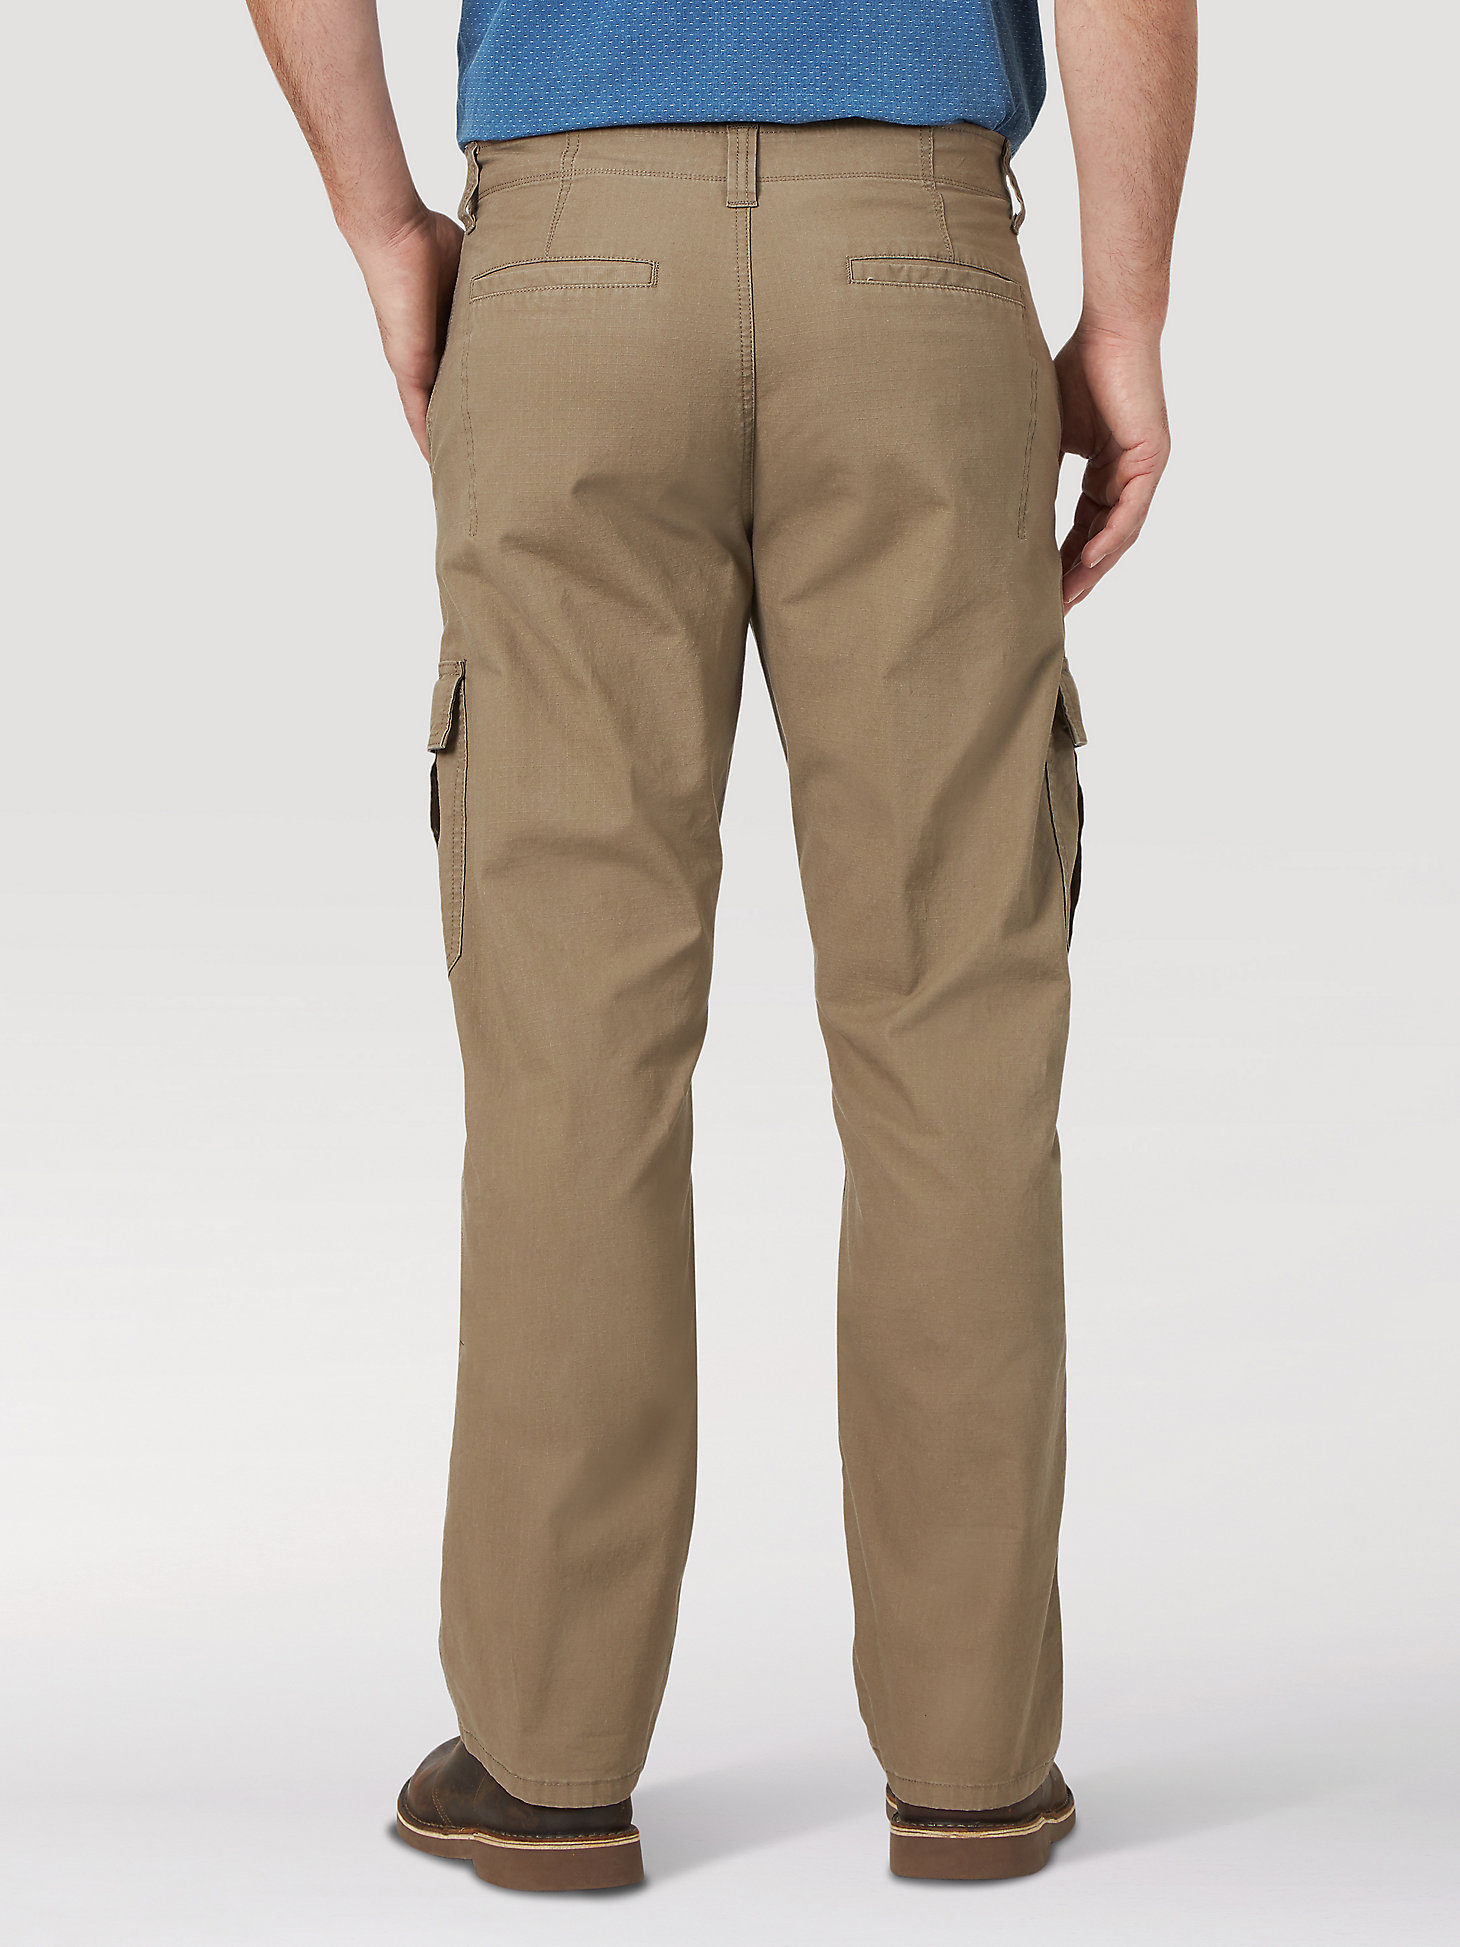 Wrangler® Men's Five Star Premium Relaxed Fit Flex Cargo Pant in Barley alternative view 1